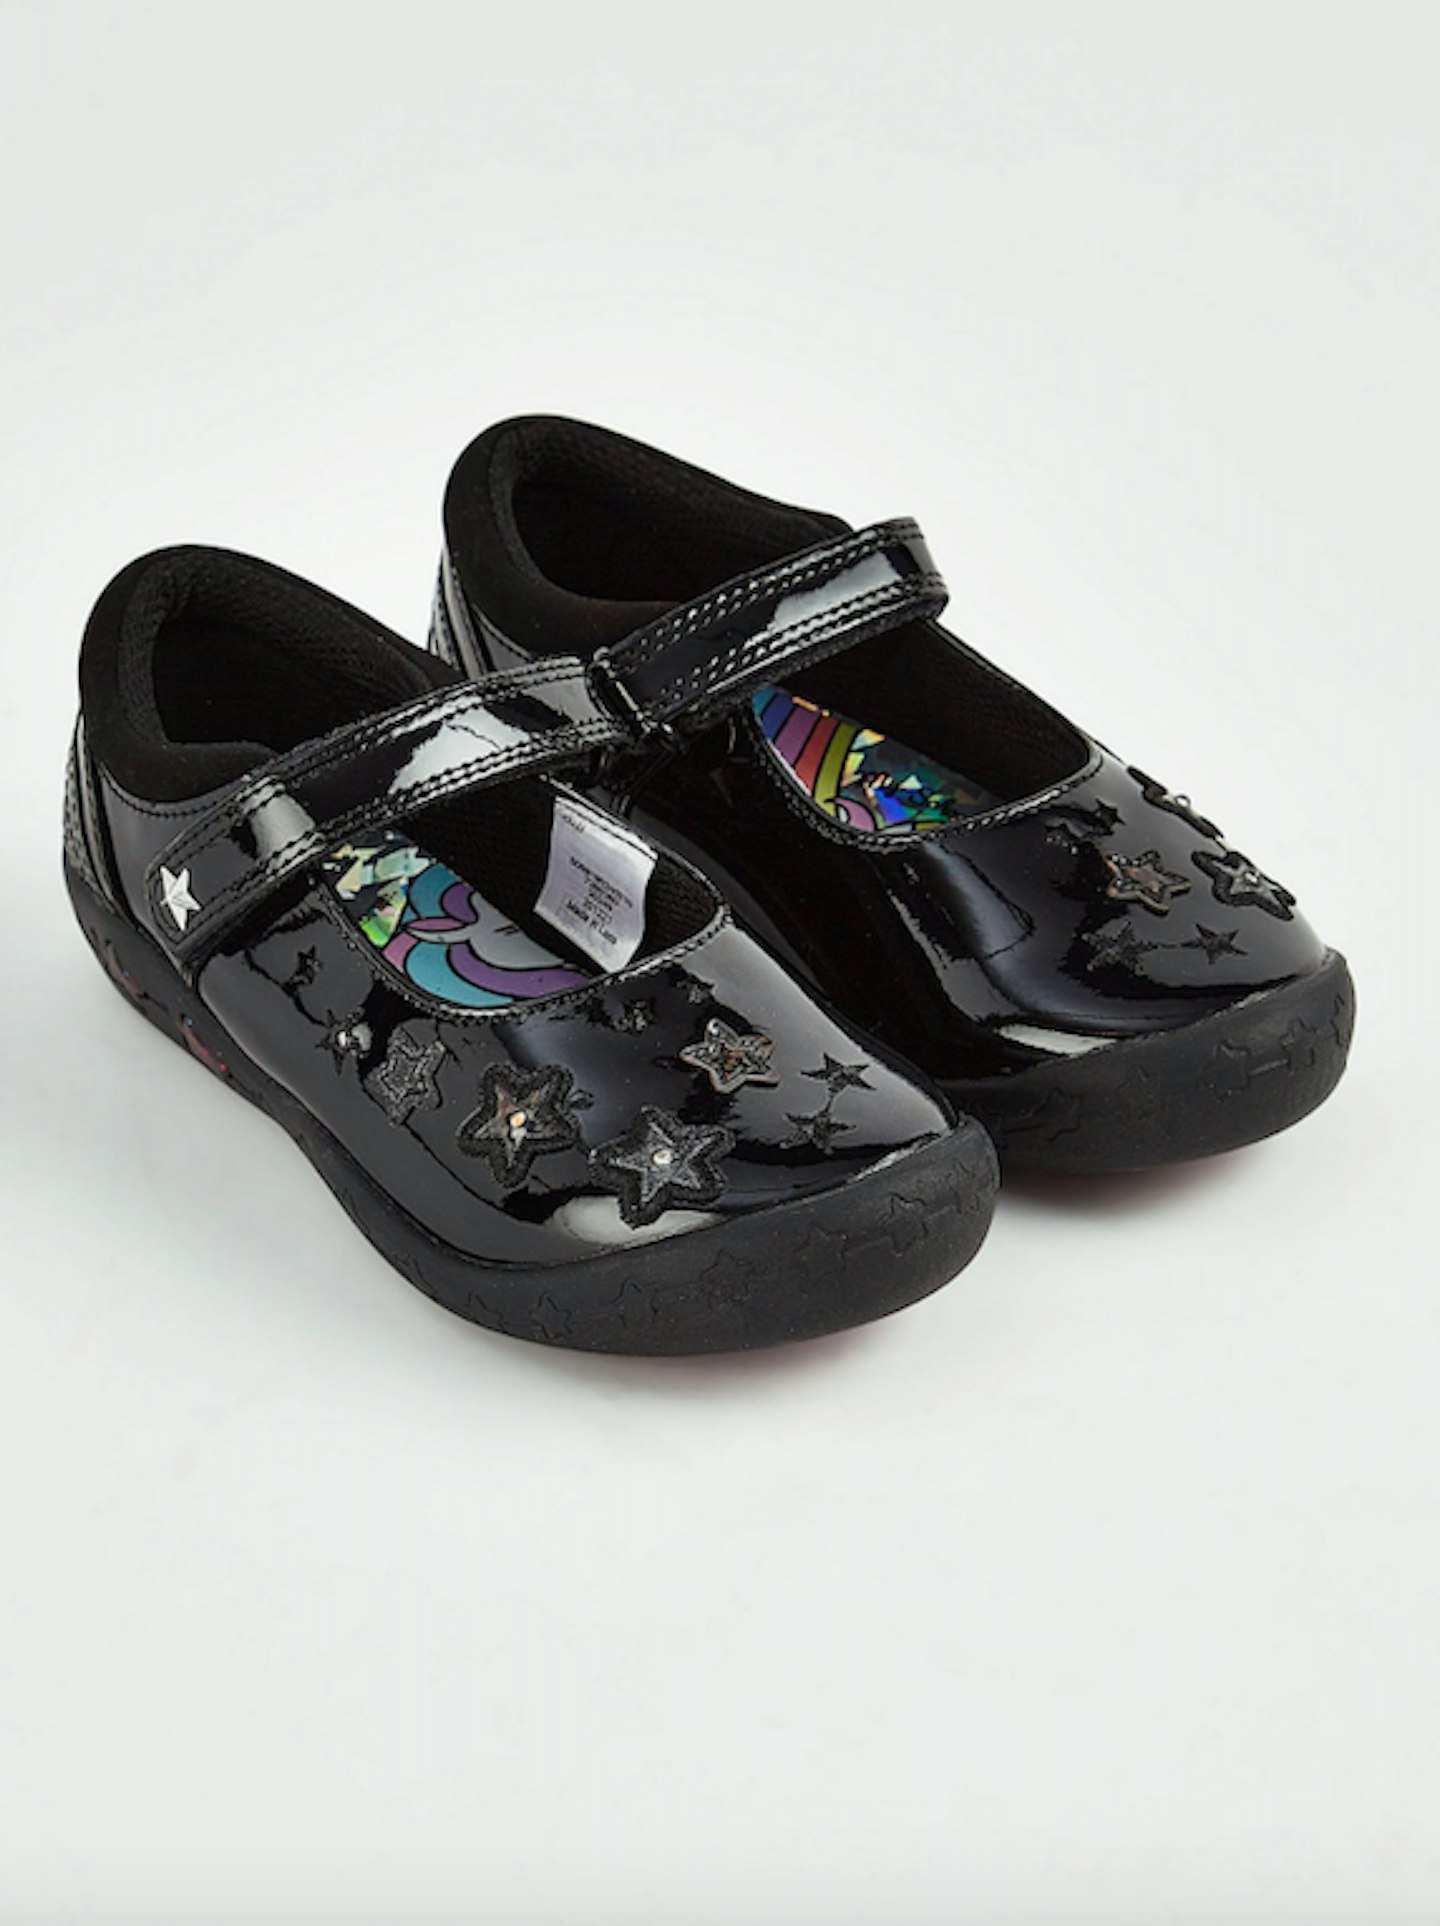 Black Light Up Patent Unicorn Shoes, £15